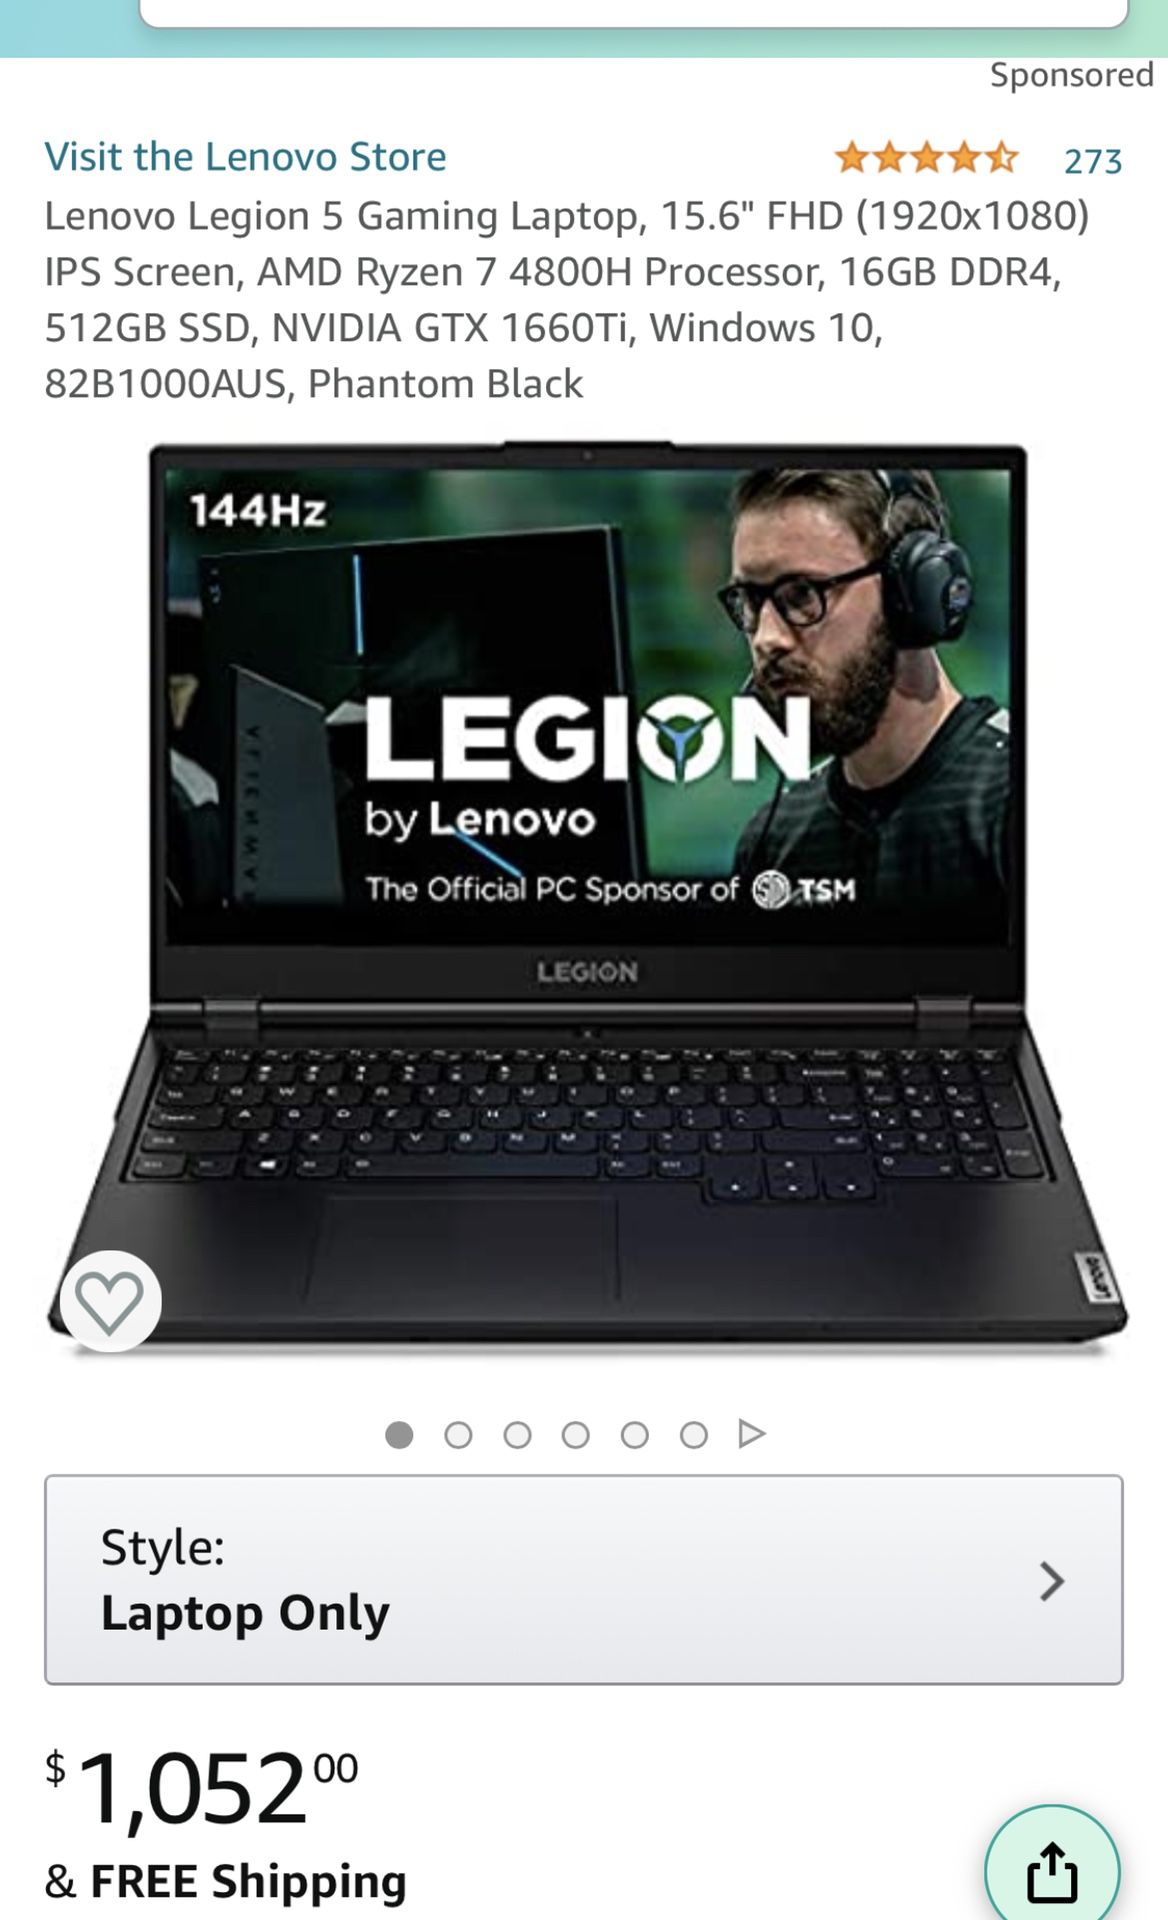 Lenovo Legion 5 Gaming Laptop, 15.6" FHD (1920x1080) IPS Screen, AMD Ryzen 7 4800H Processor, 16GB DDR4, 512GB SSD, NVIDIA GTX 1660Ti, Windows 10